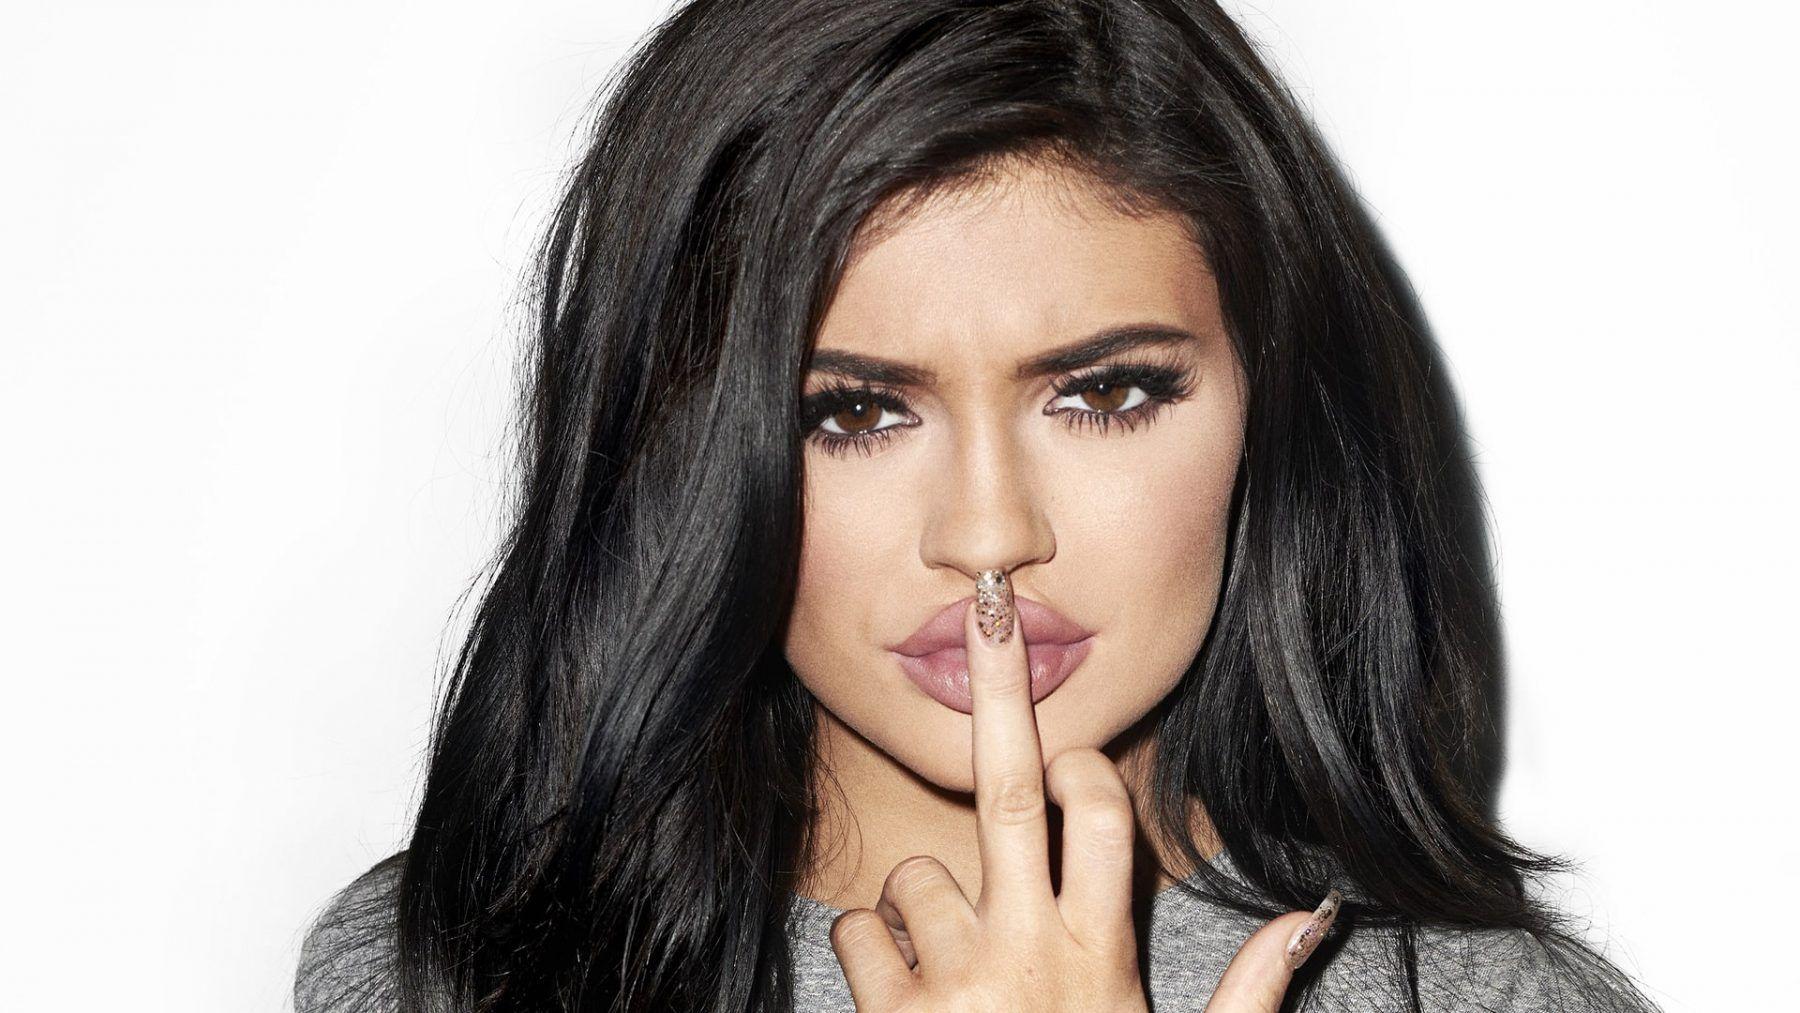 Kylie Jenner Desktop Wallpapers Top Free Kylie Jenner Desktop Images, Photos, Reviews